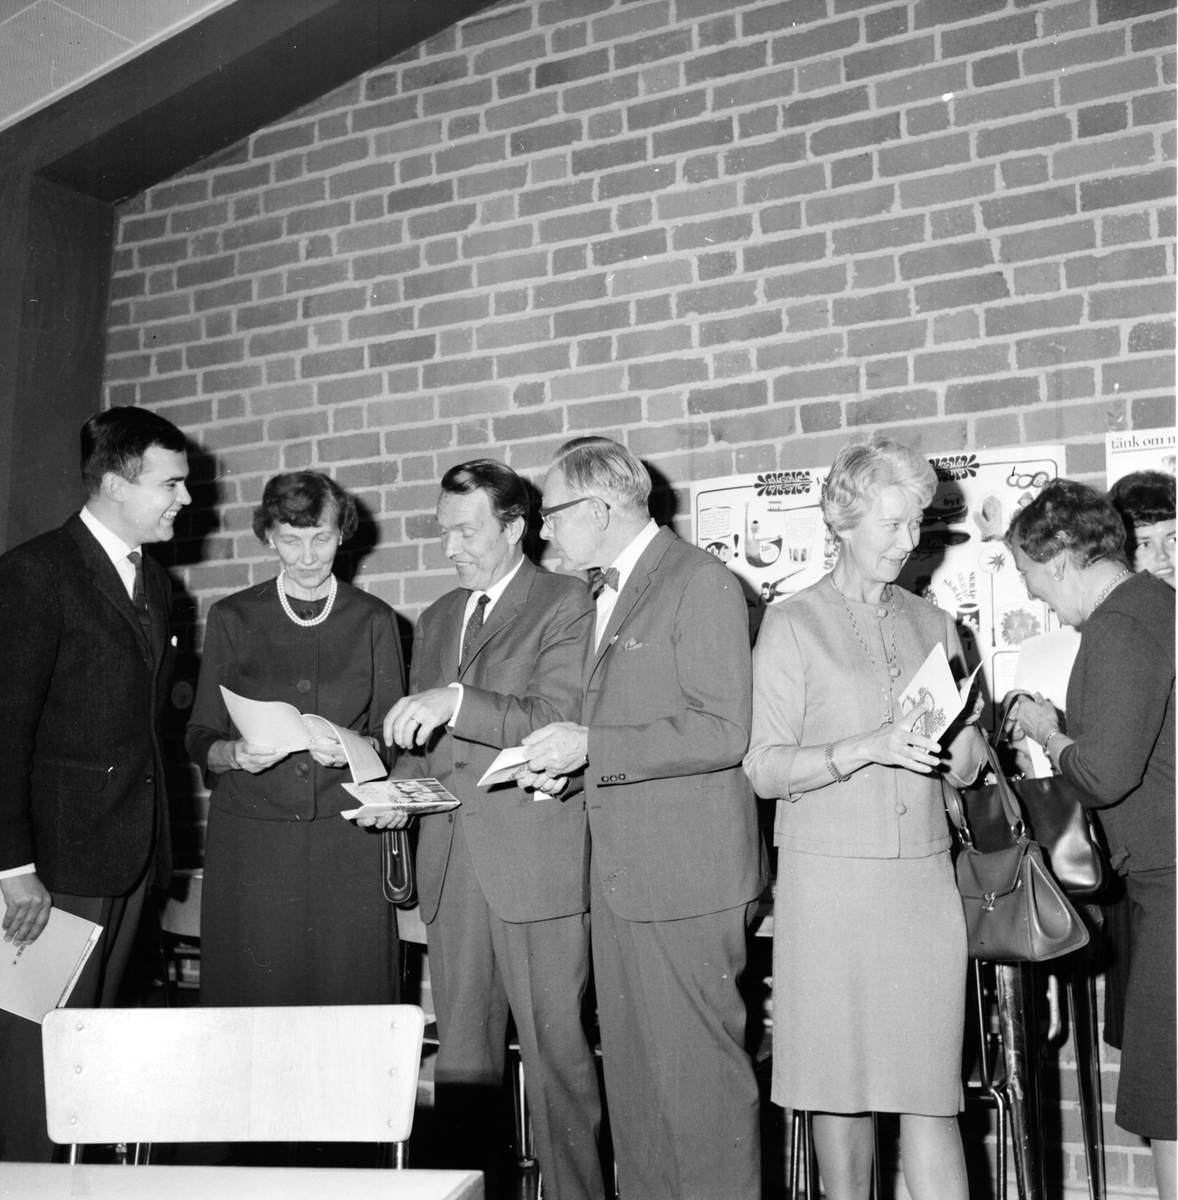 Sparbanksmöte,
Centralskolan,
22 September 1964